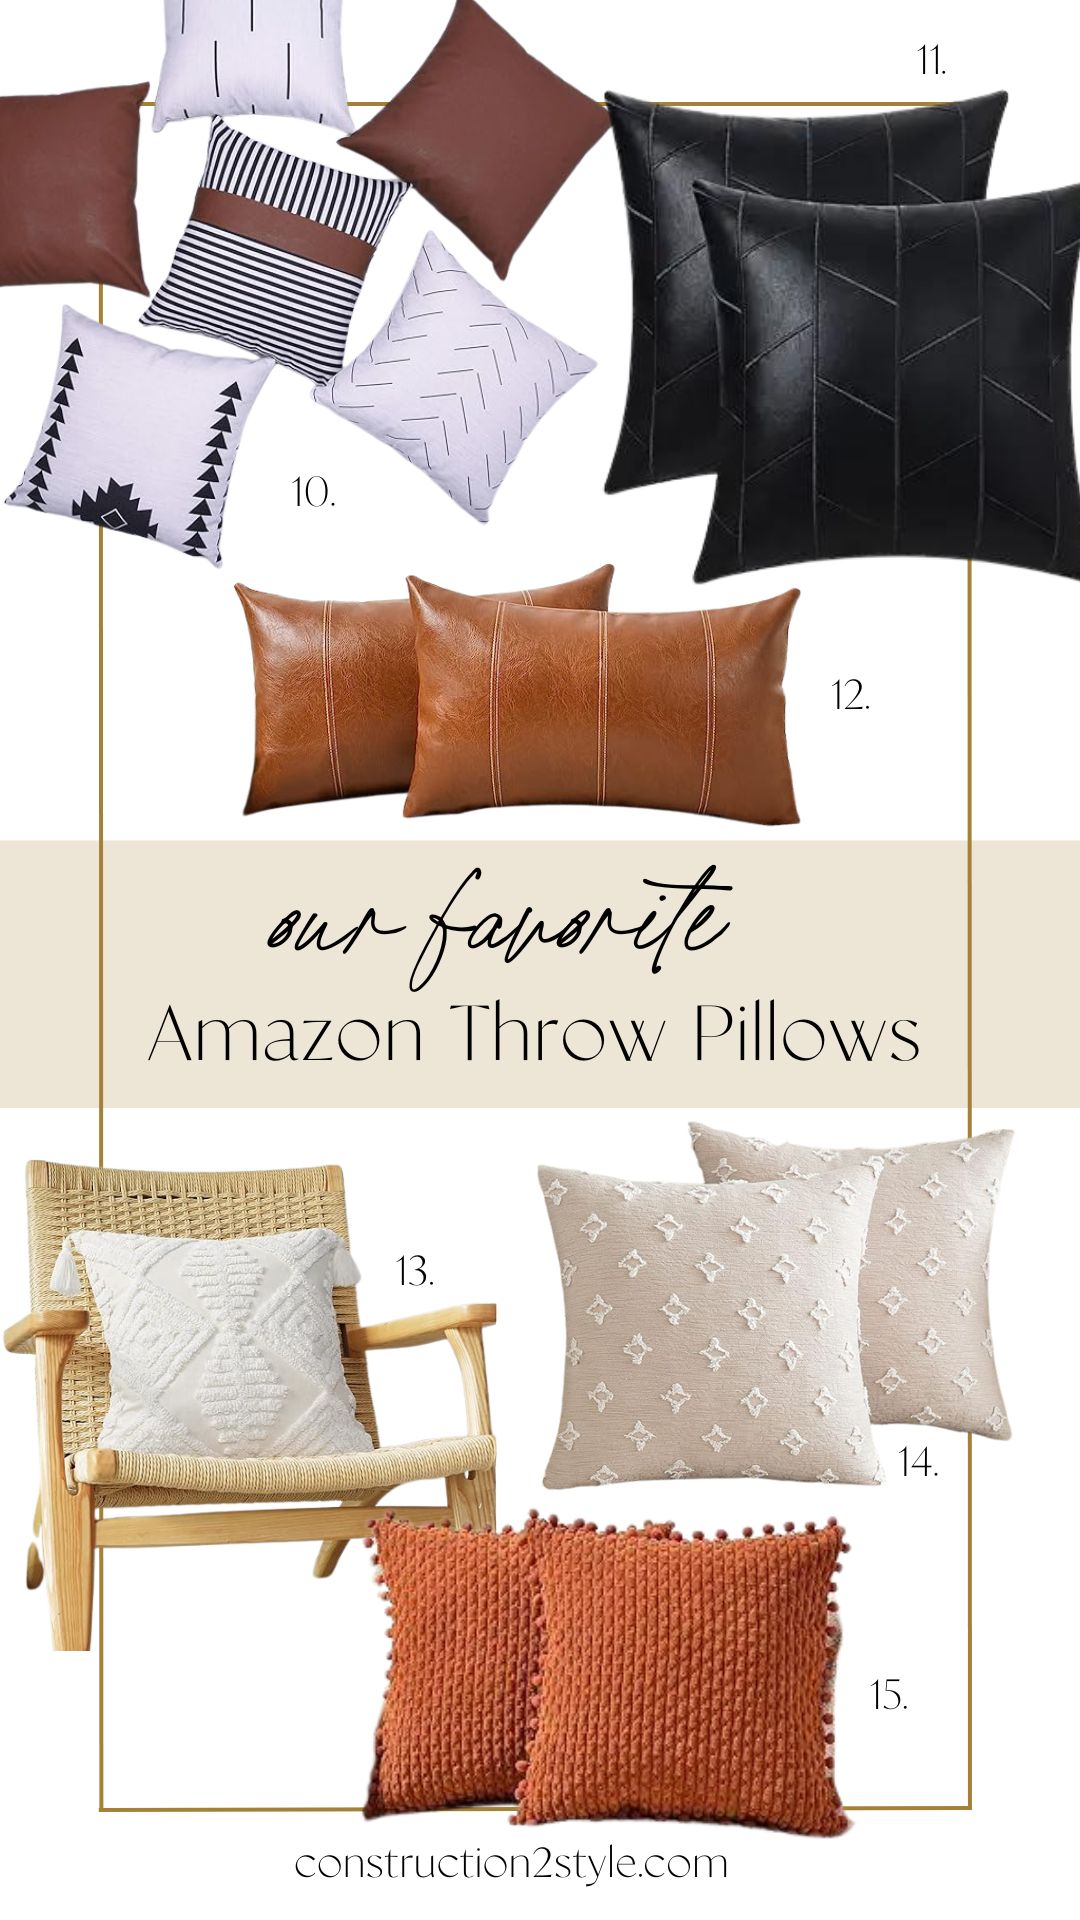 Our Favorite Amazon Throw Pillows | construction2style